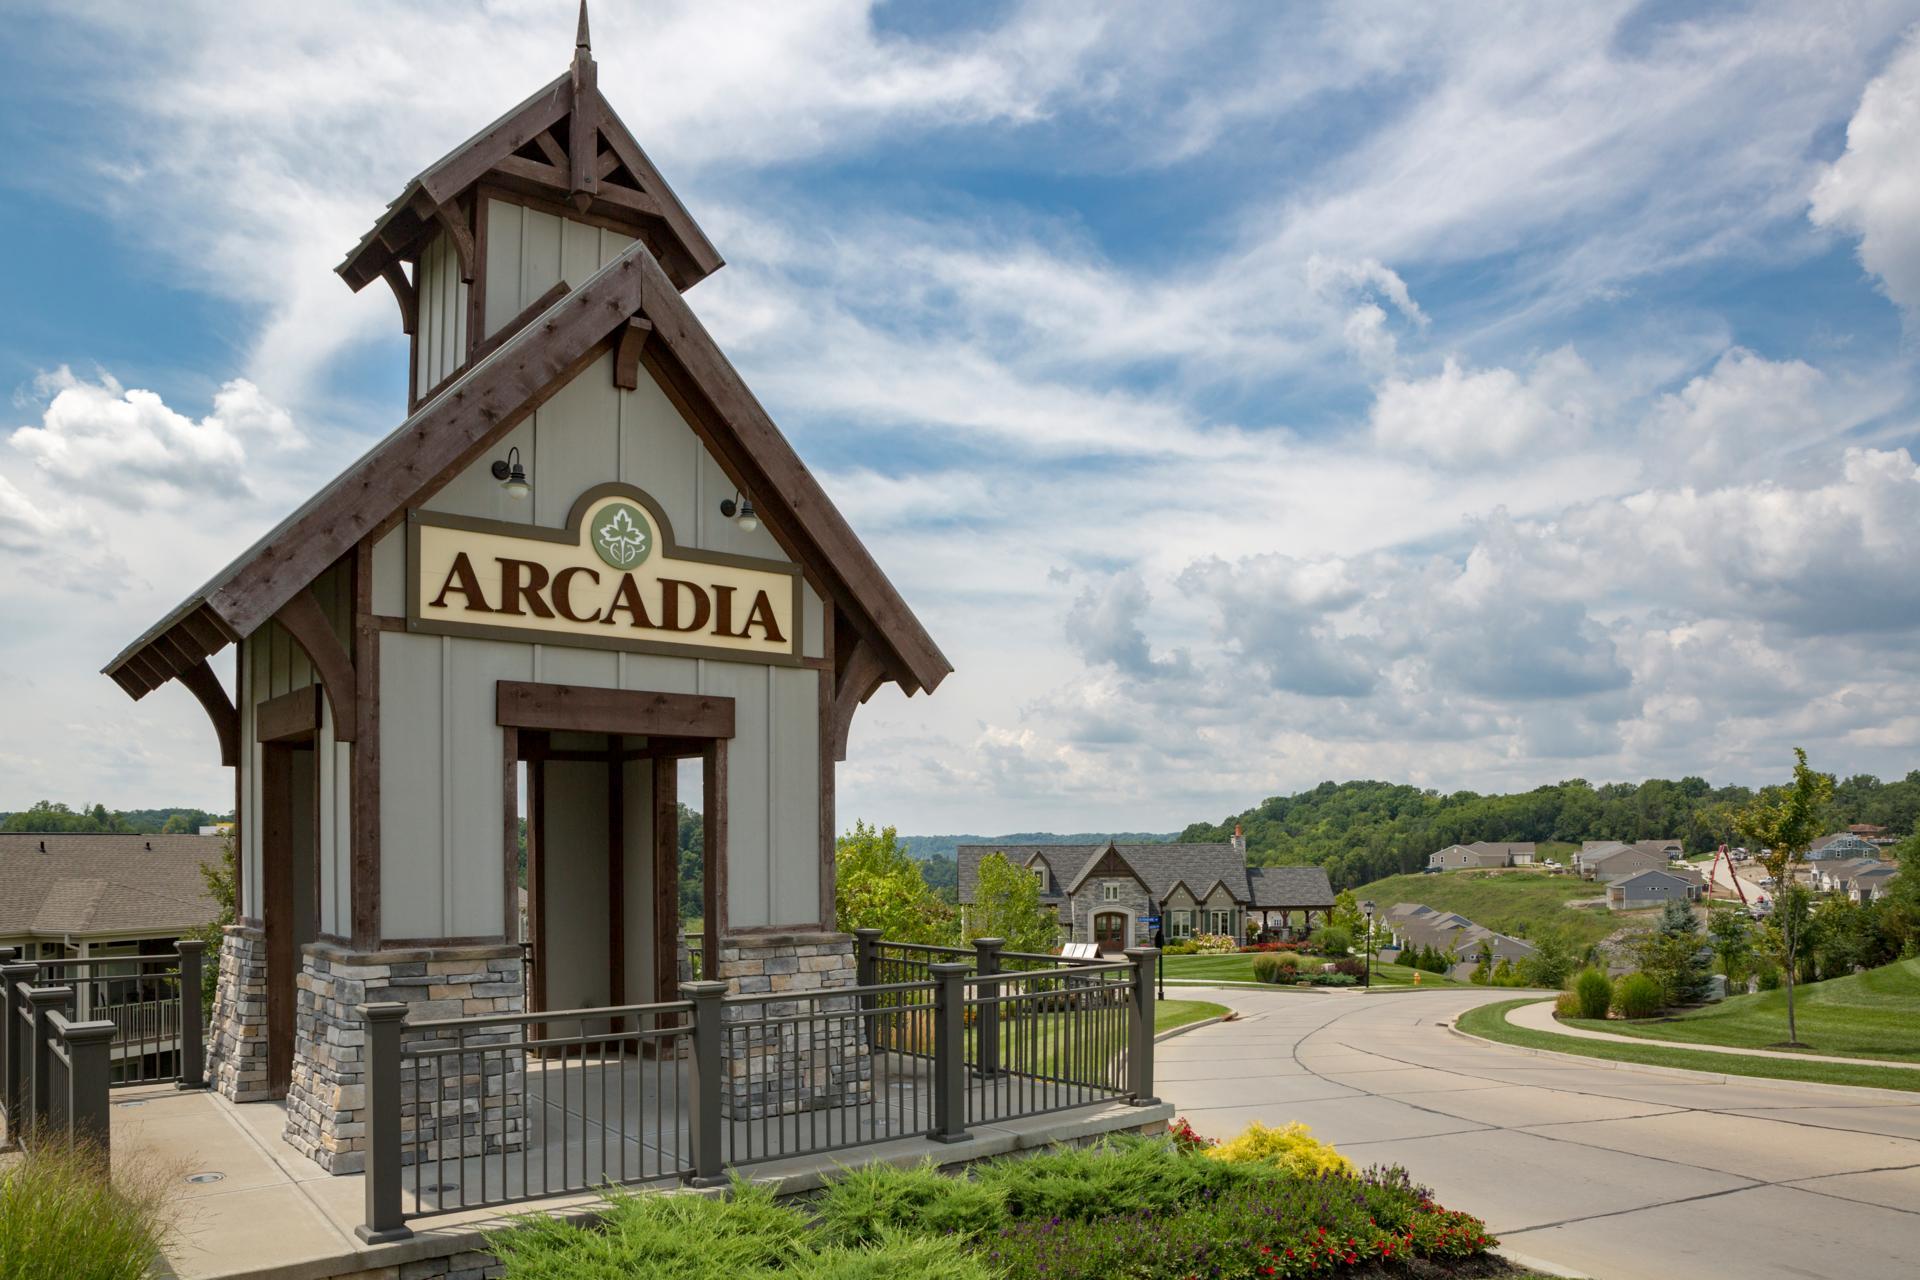 The Arcadia Community Entrance